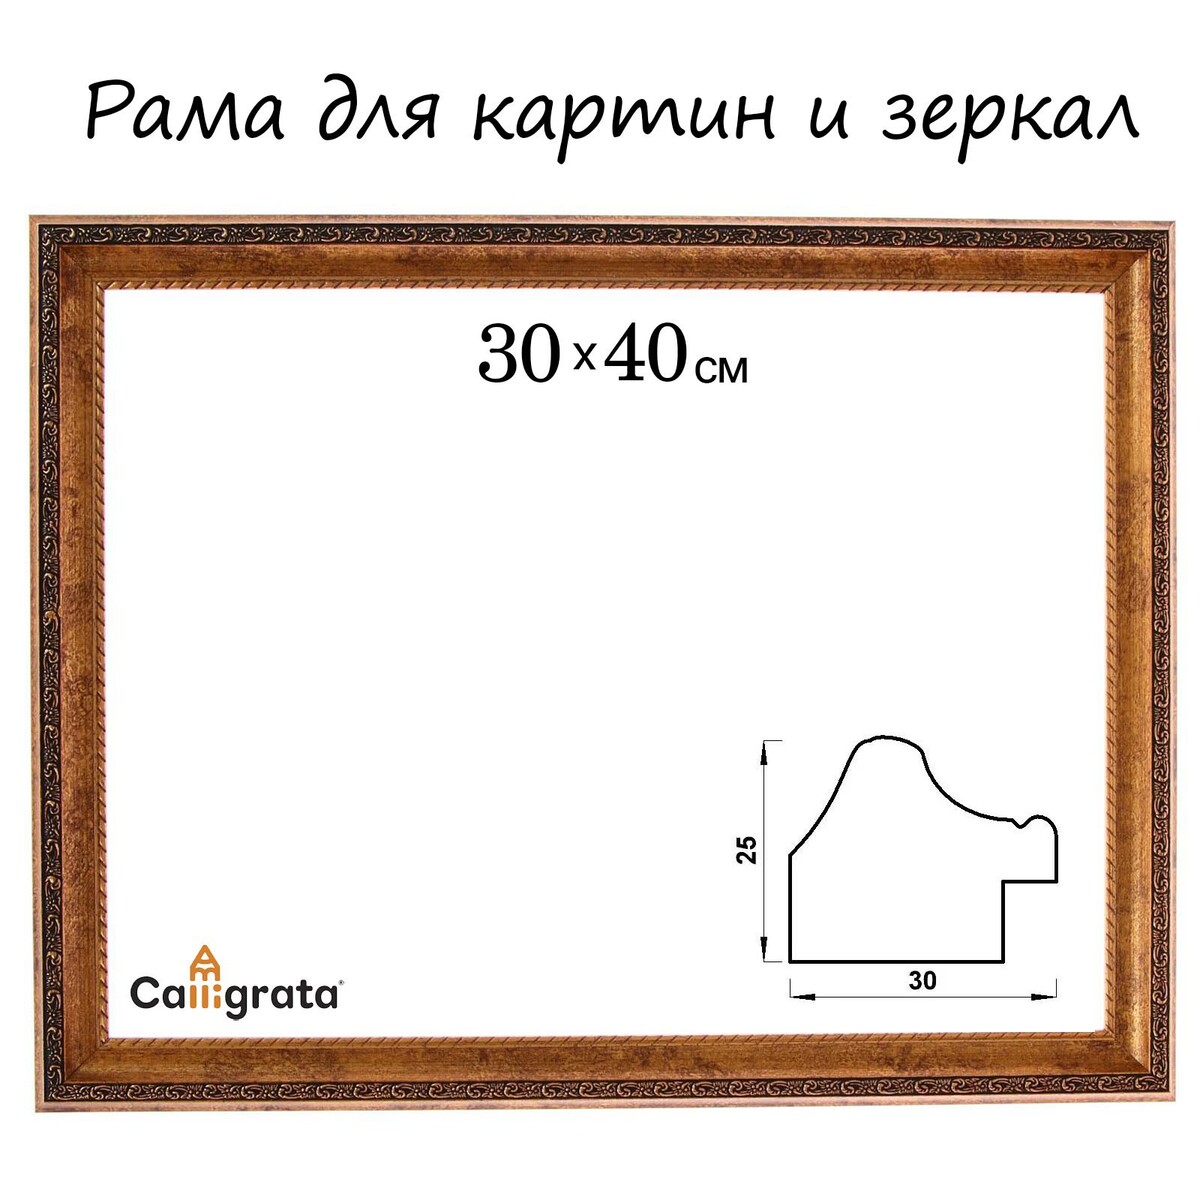 Рама для картин (зеркал) 30 х 40 х 3,0 см, пластиковая, calligrata 6792, бронзовая цепочка для сумки пластиковая 24 × 18 мм 120 см коричневый